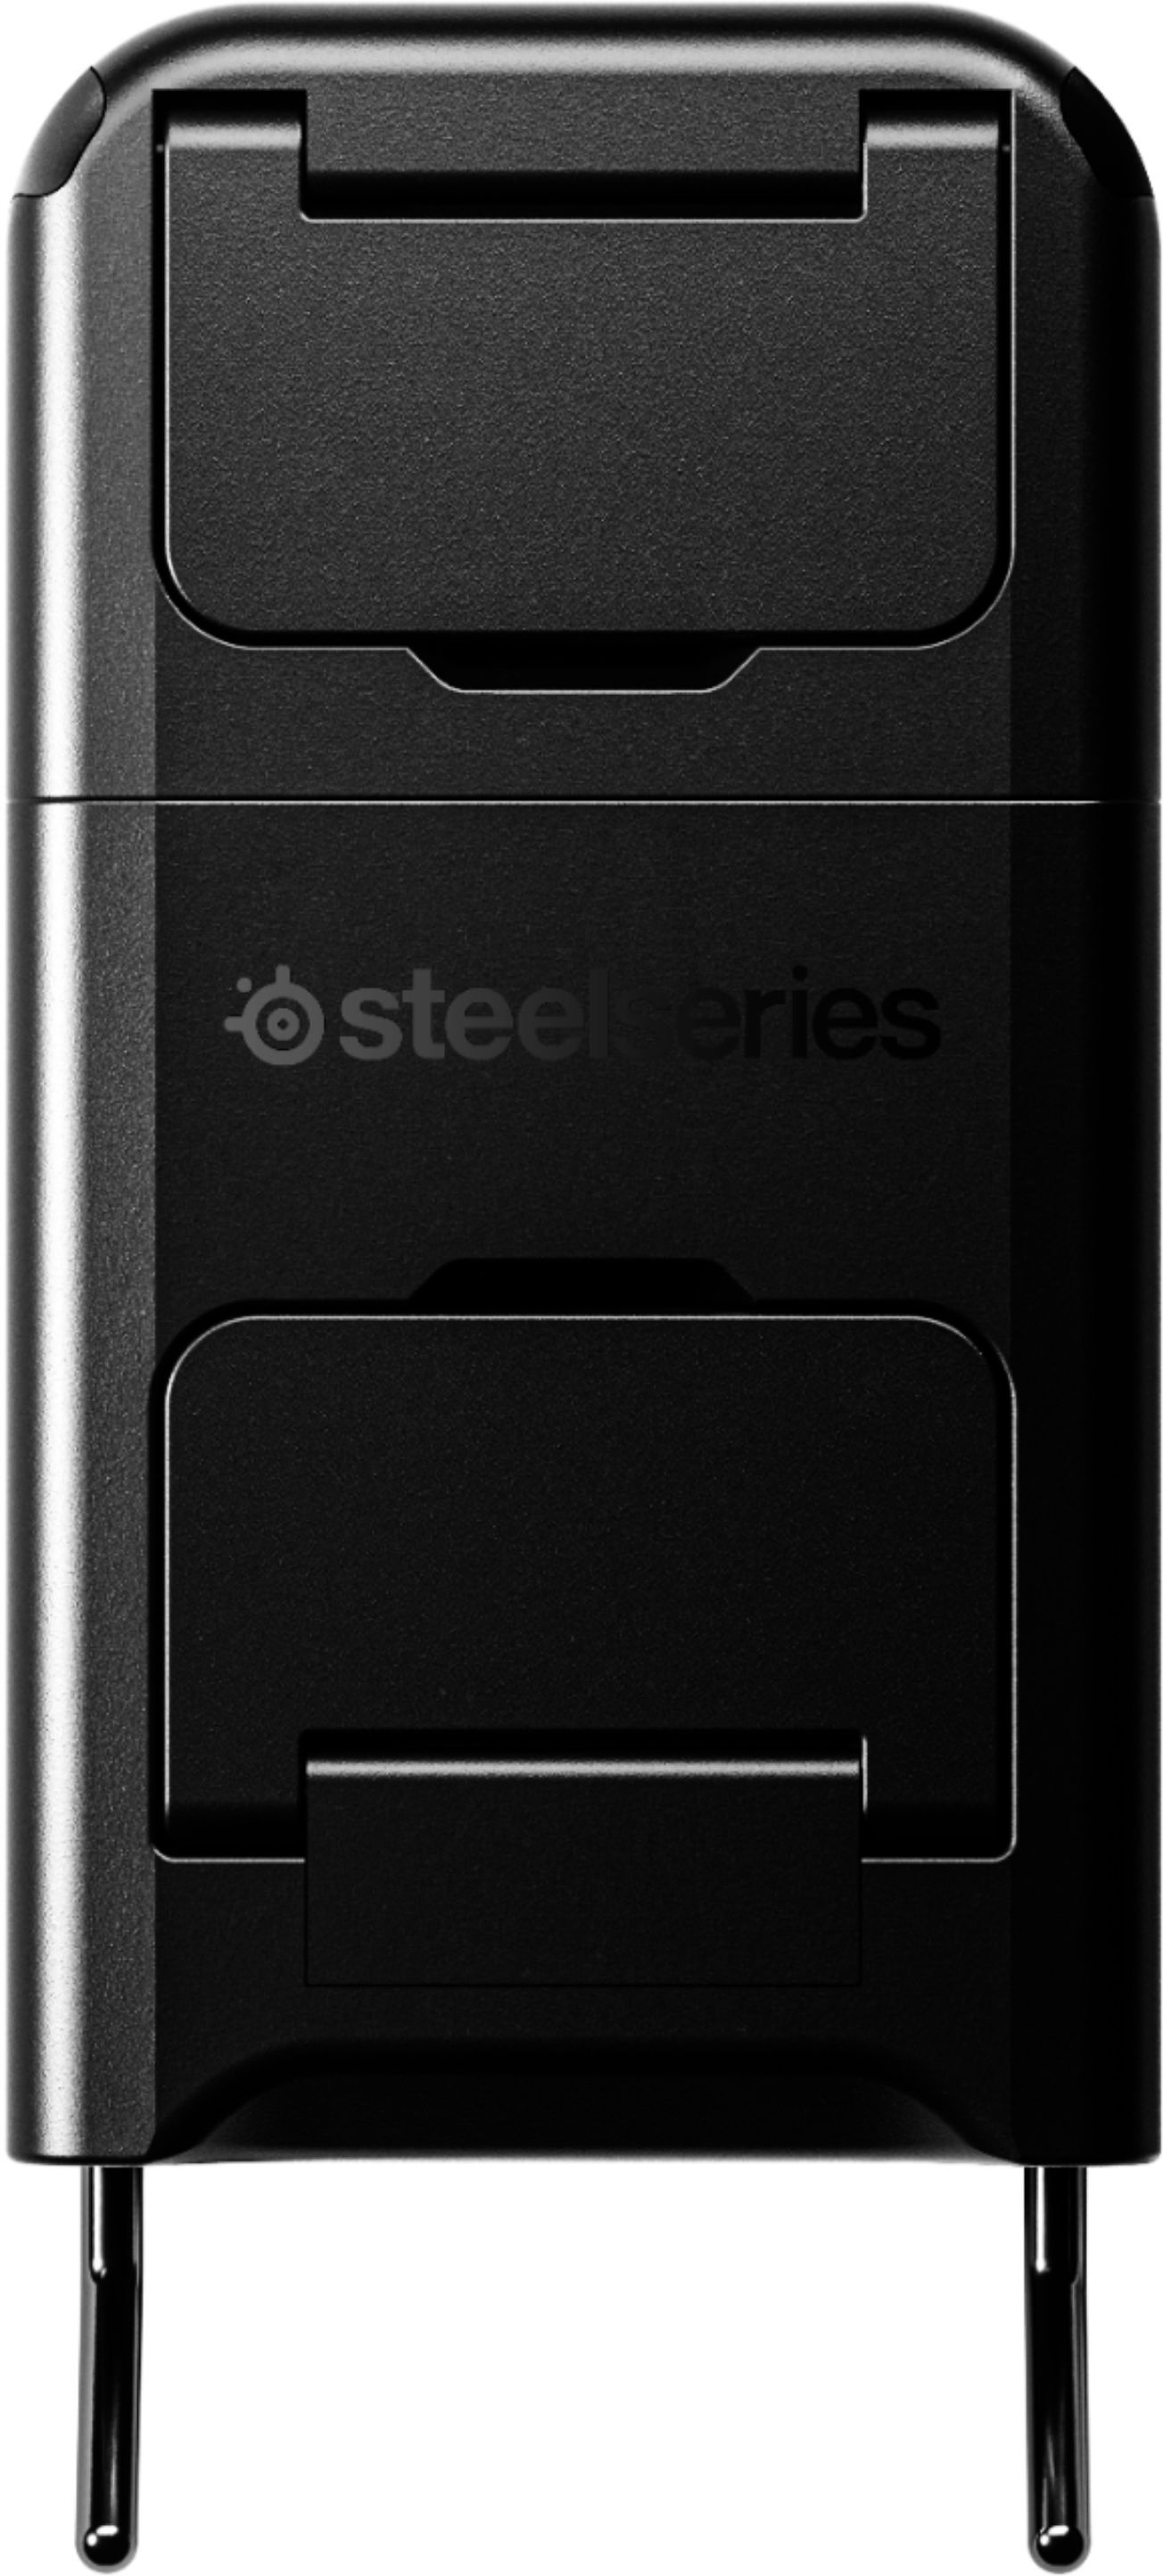 SteelSeries Nimbus+ Wireless Gaming Controller - Apple